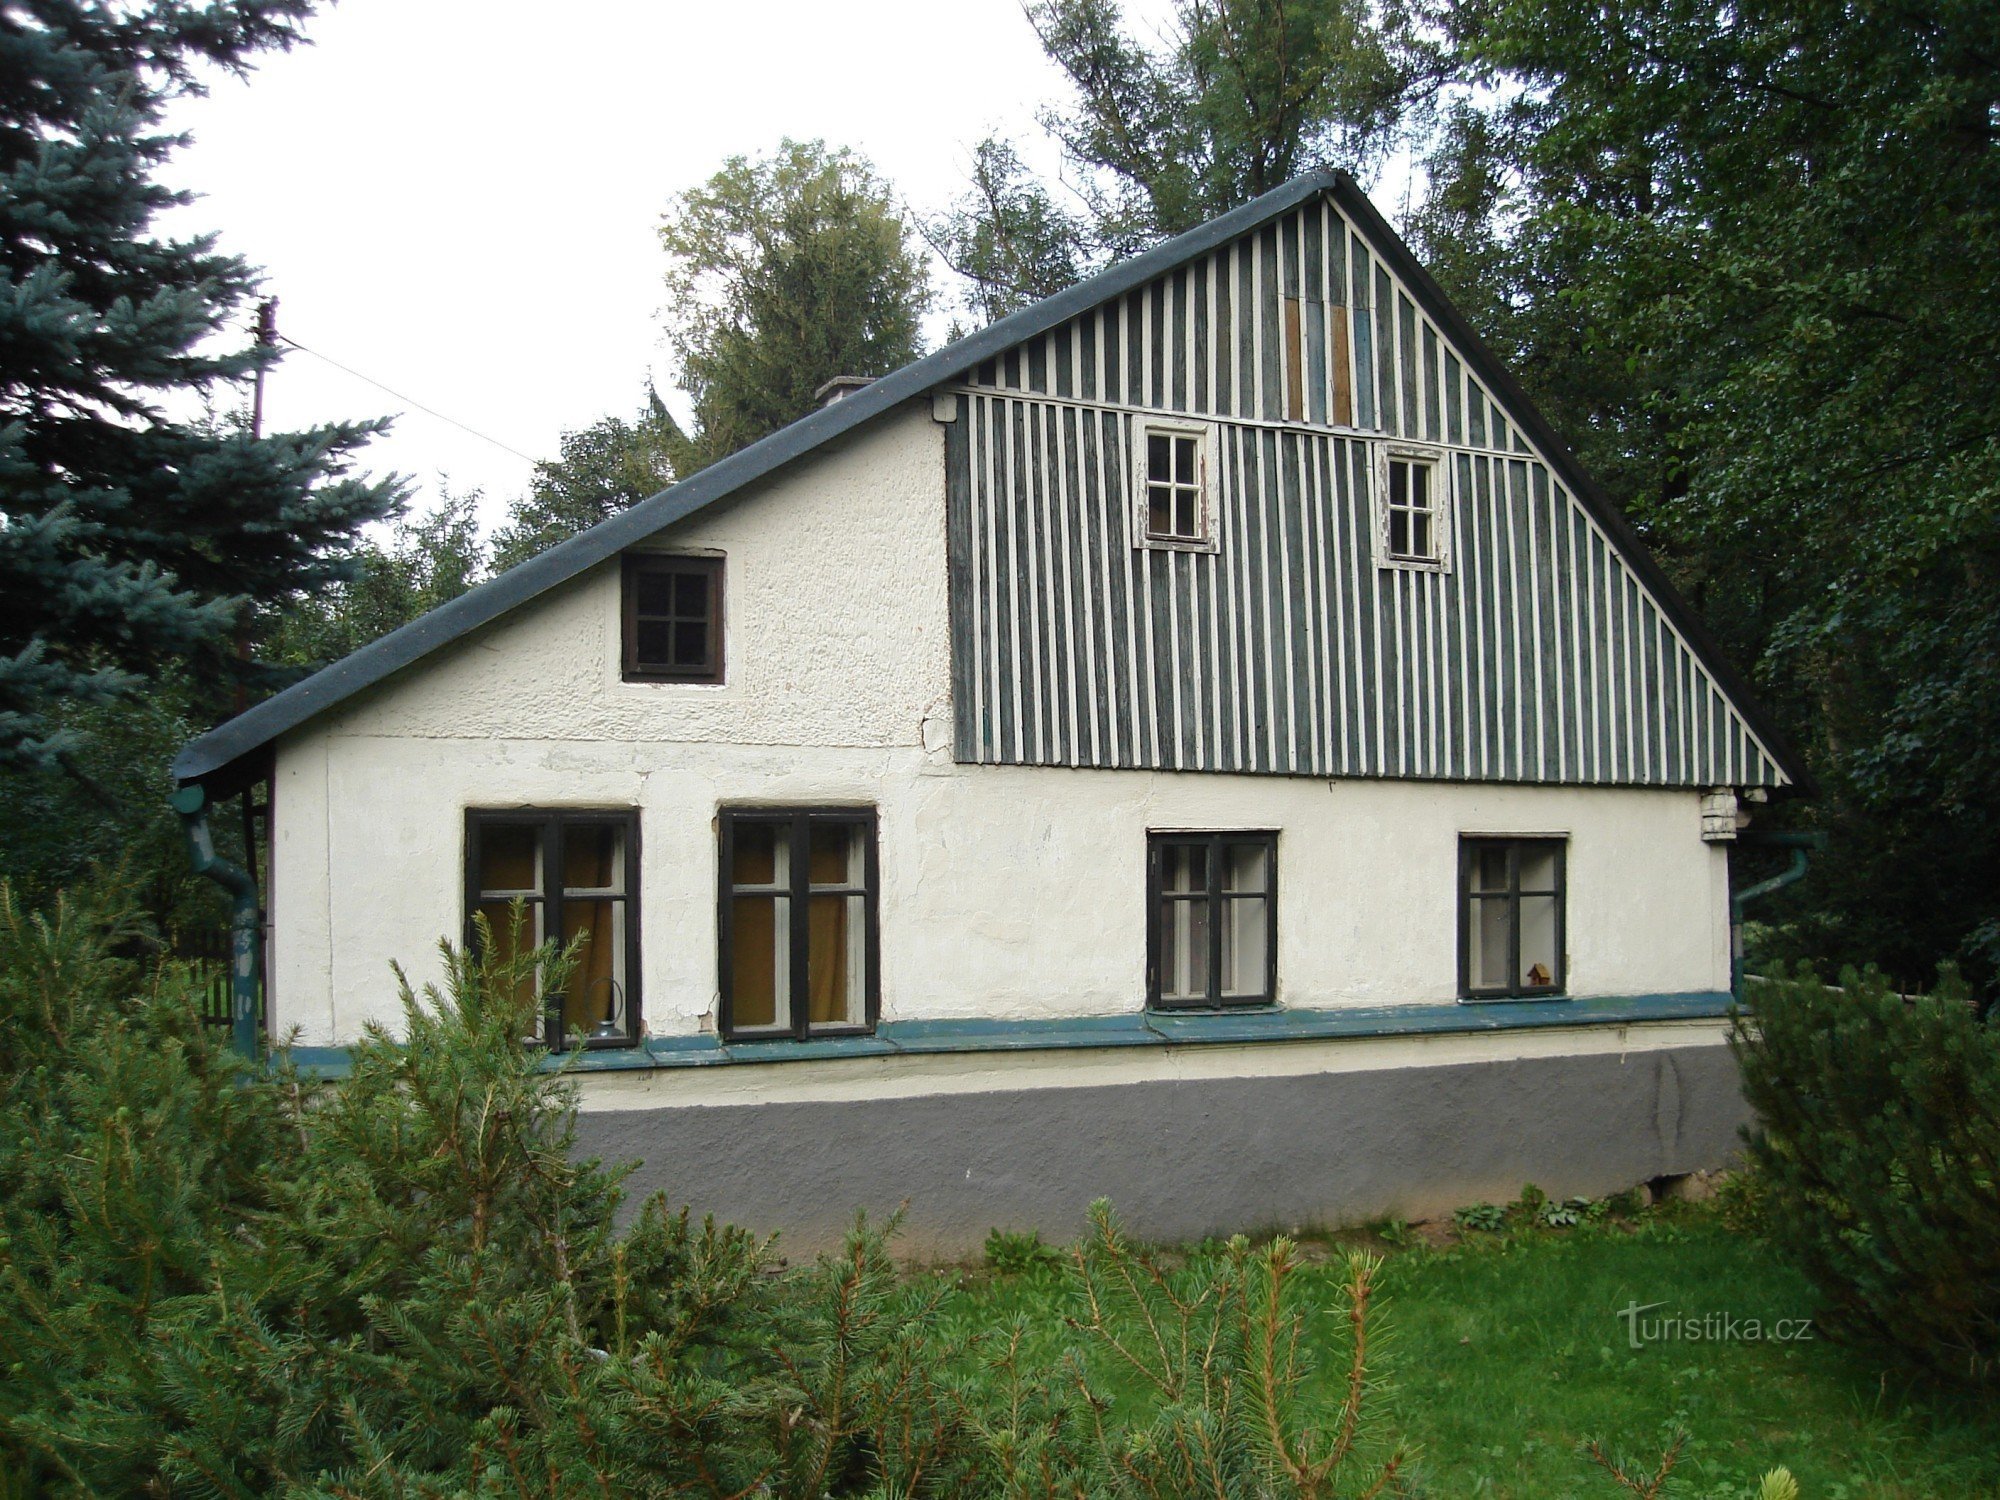 The house where Bohumil Hanč lived